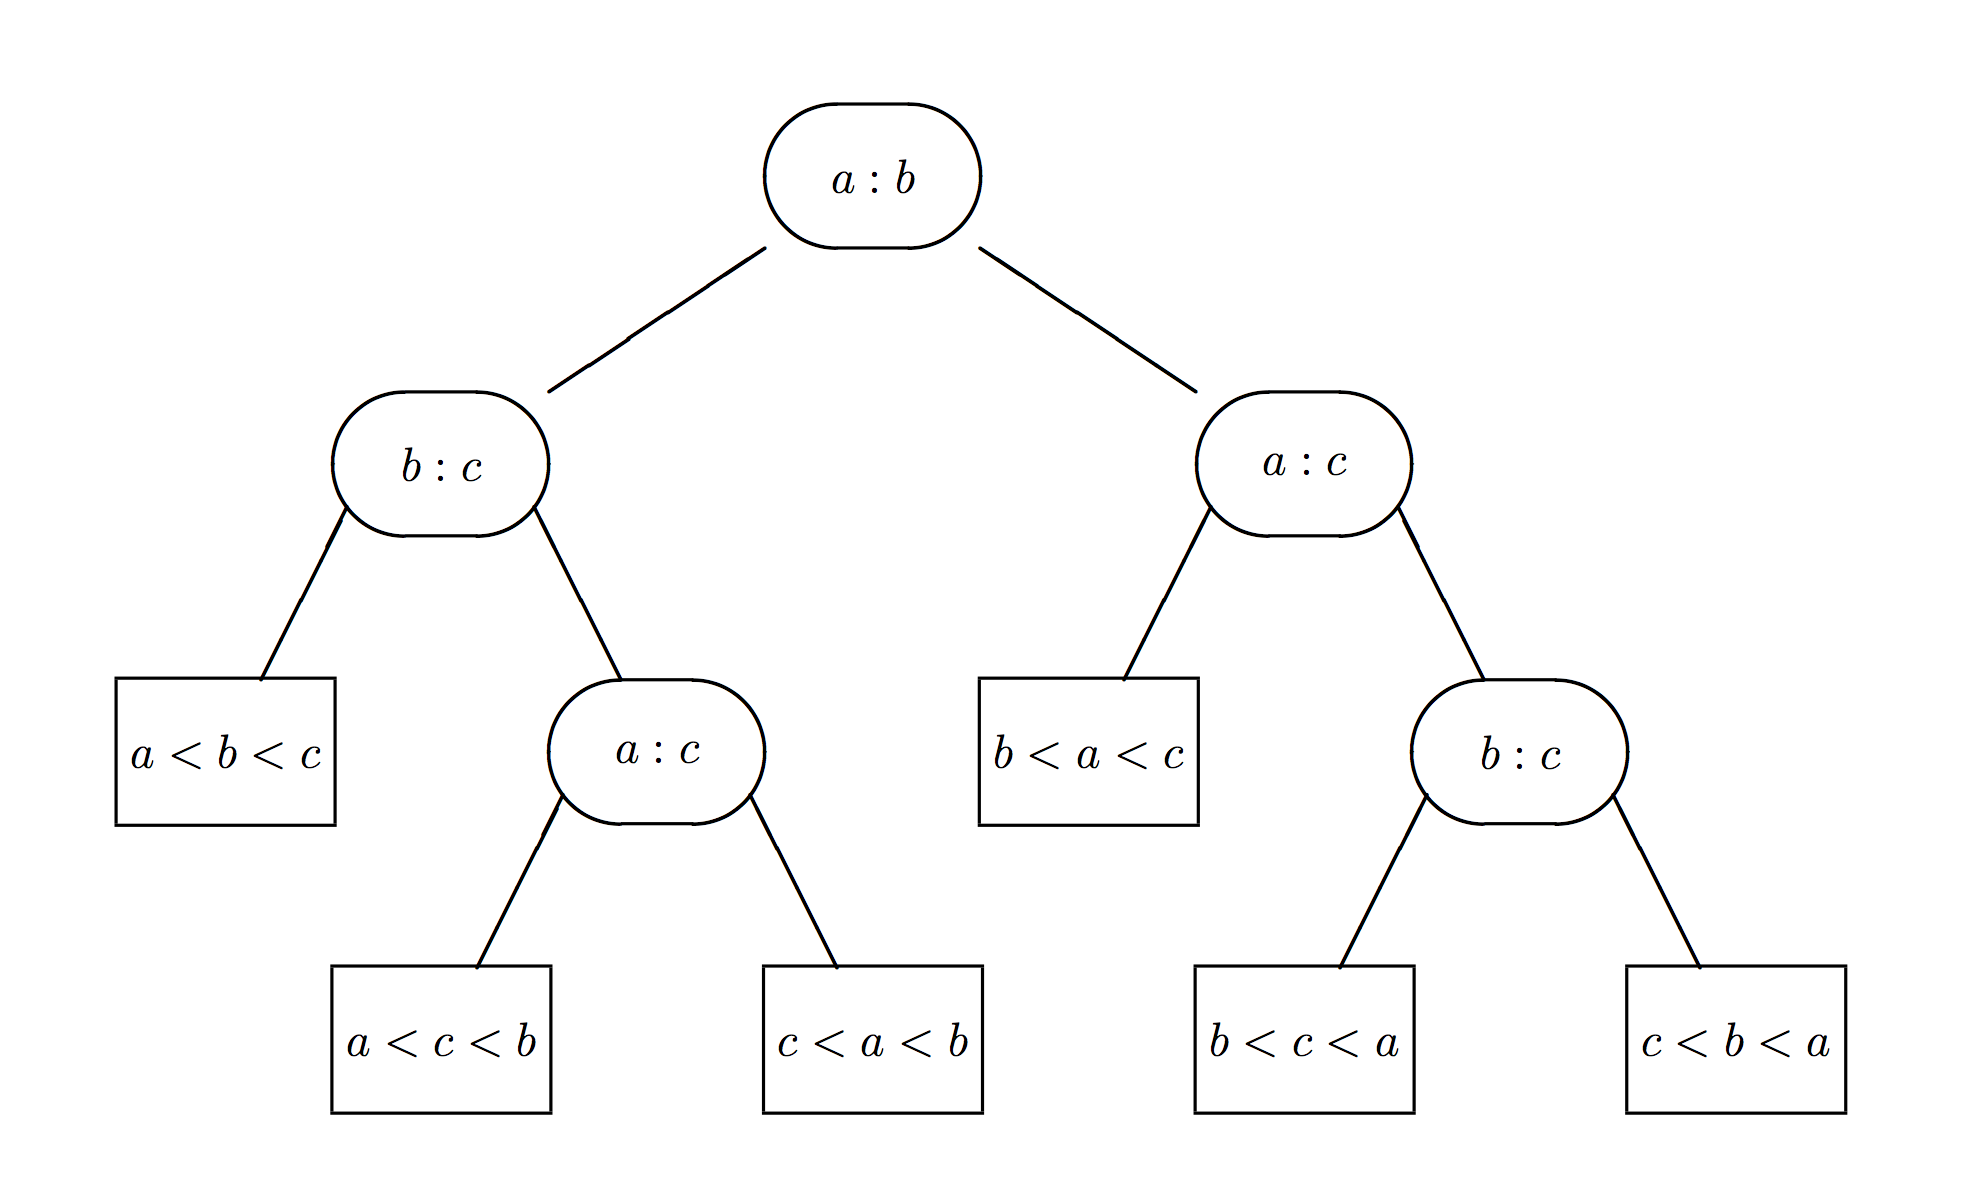 Example Sorting Tree